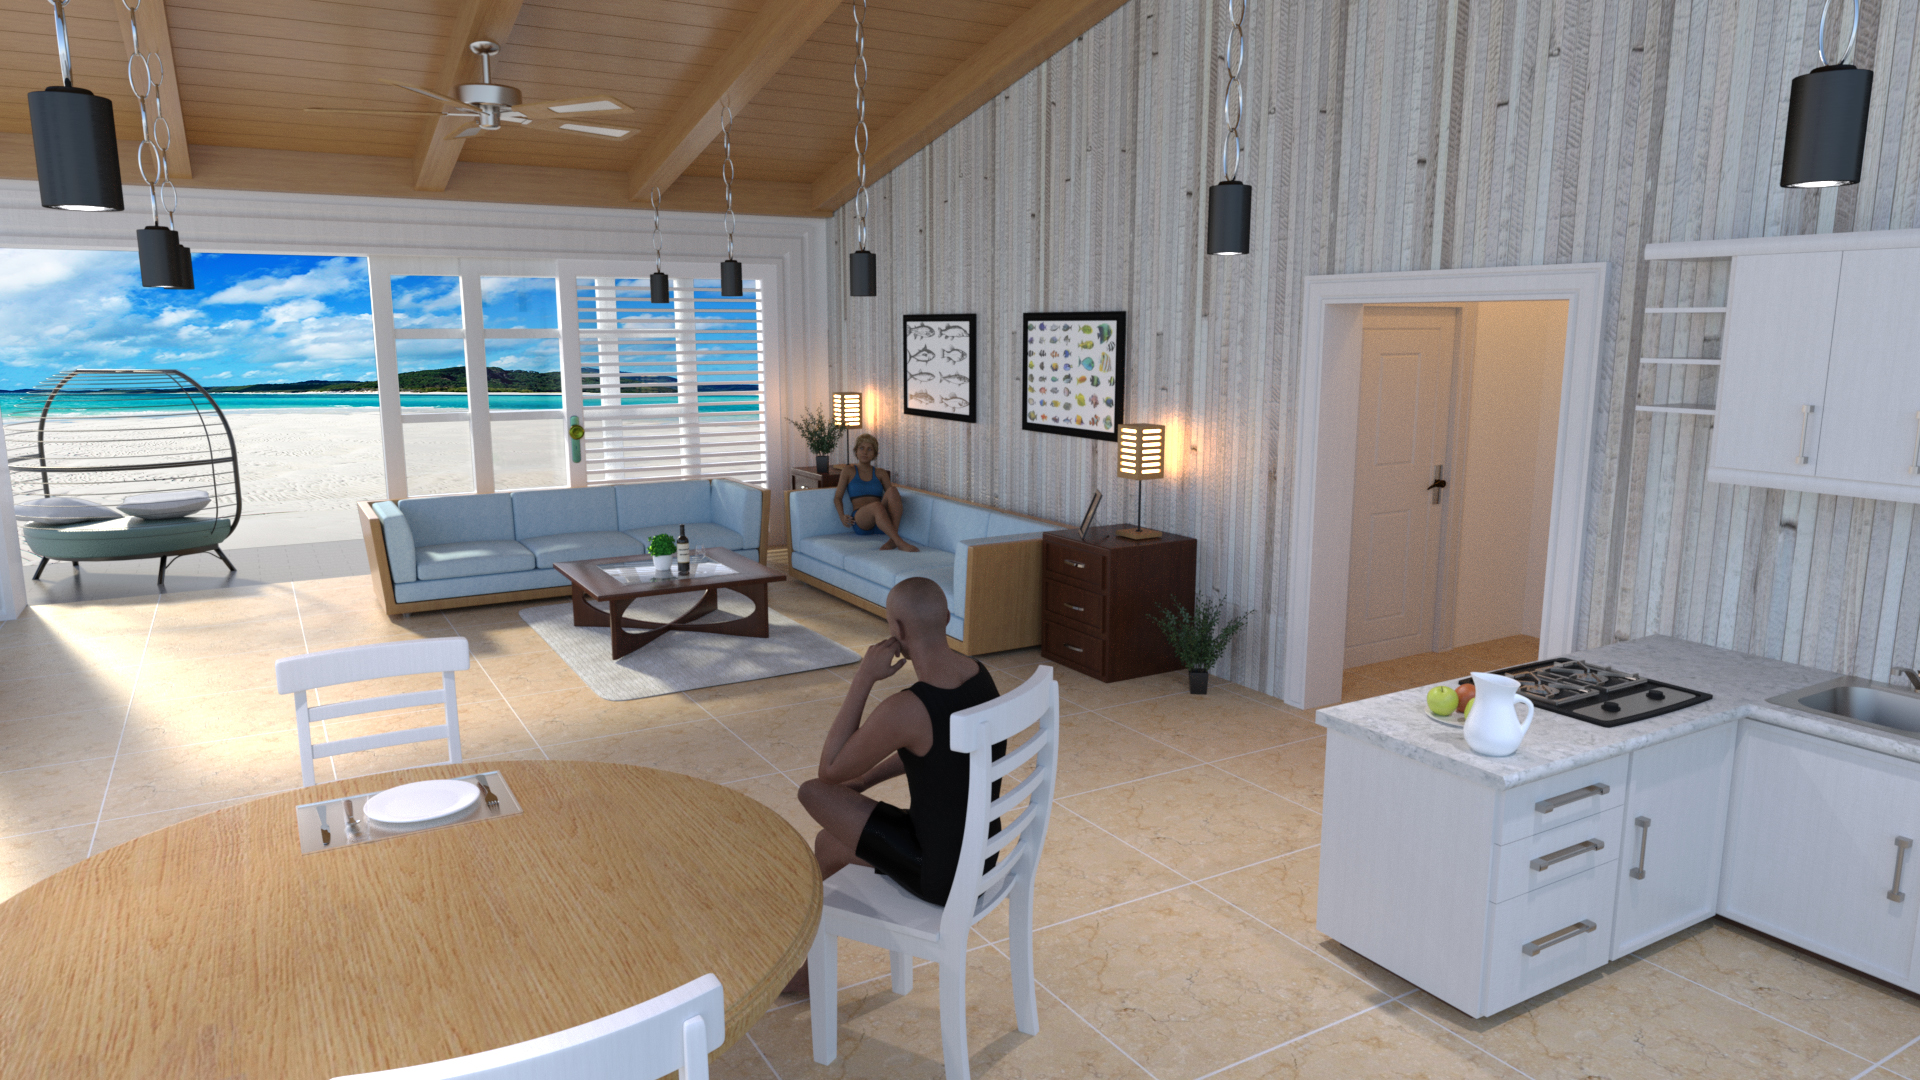 TS Beach House by: Tesla3dCorp, 3D Models by Daz 3D